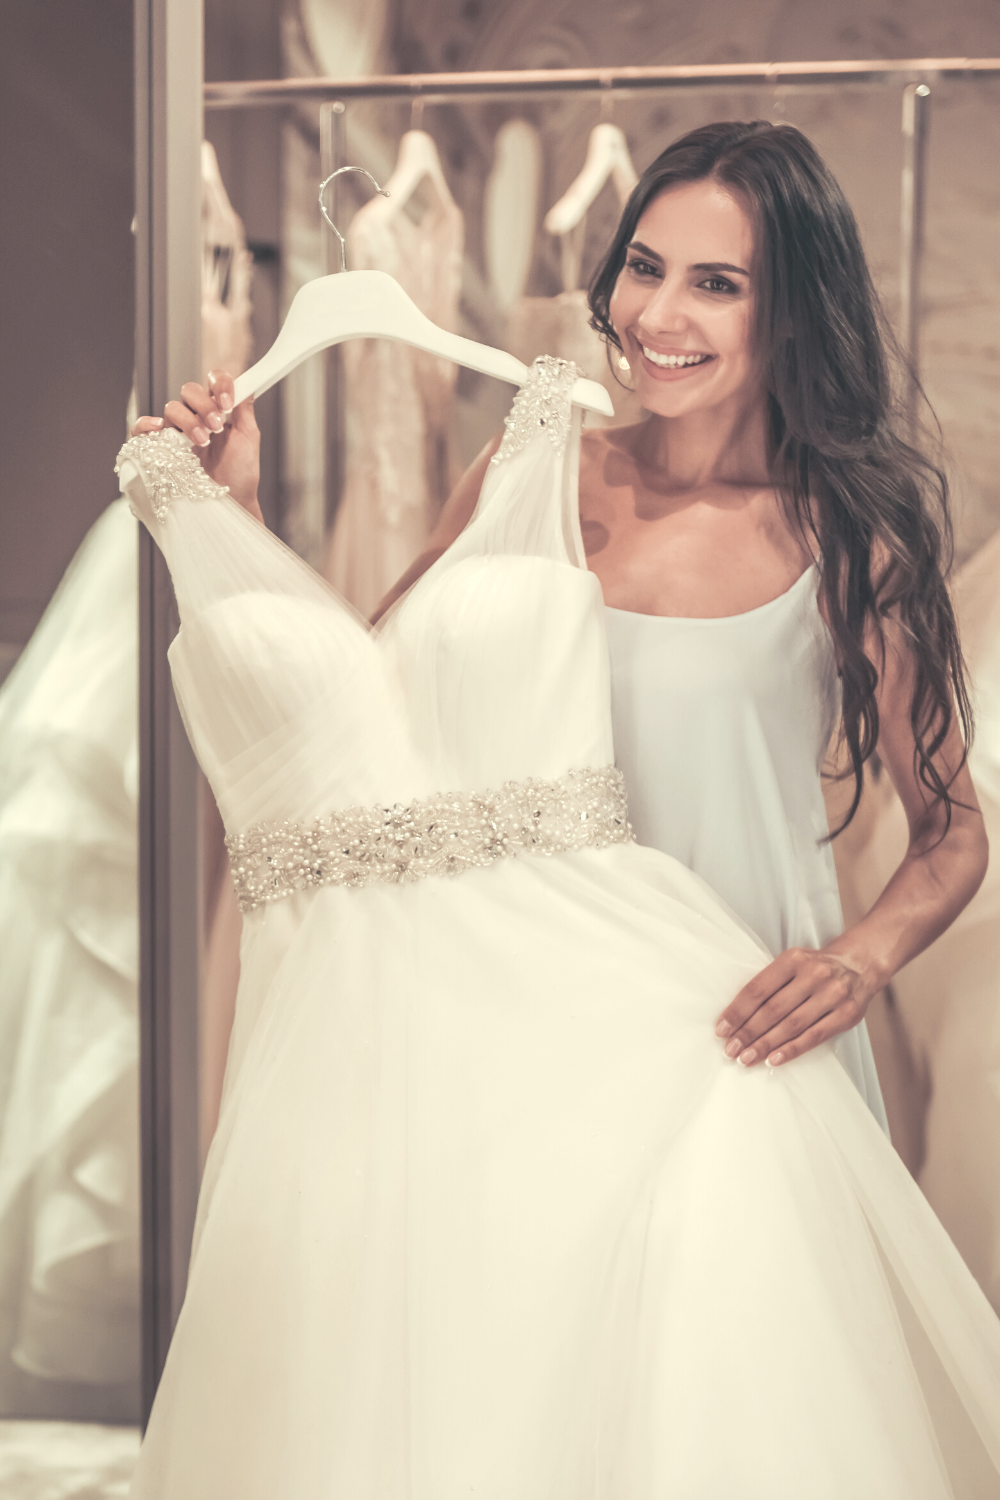 49 Stylish And Pretty Backyard Wedding Dresses - Weddingomania